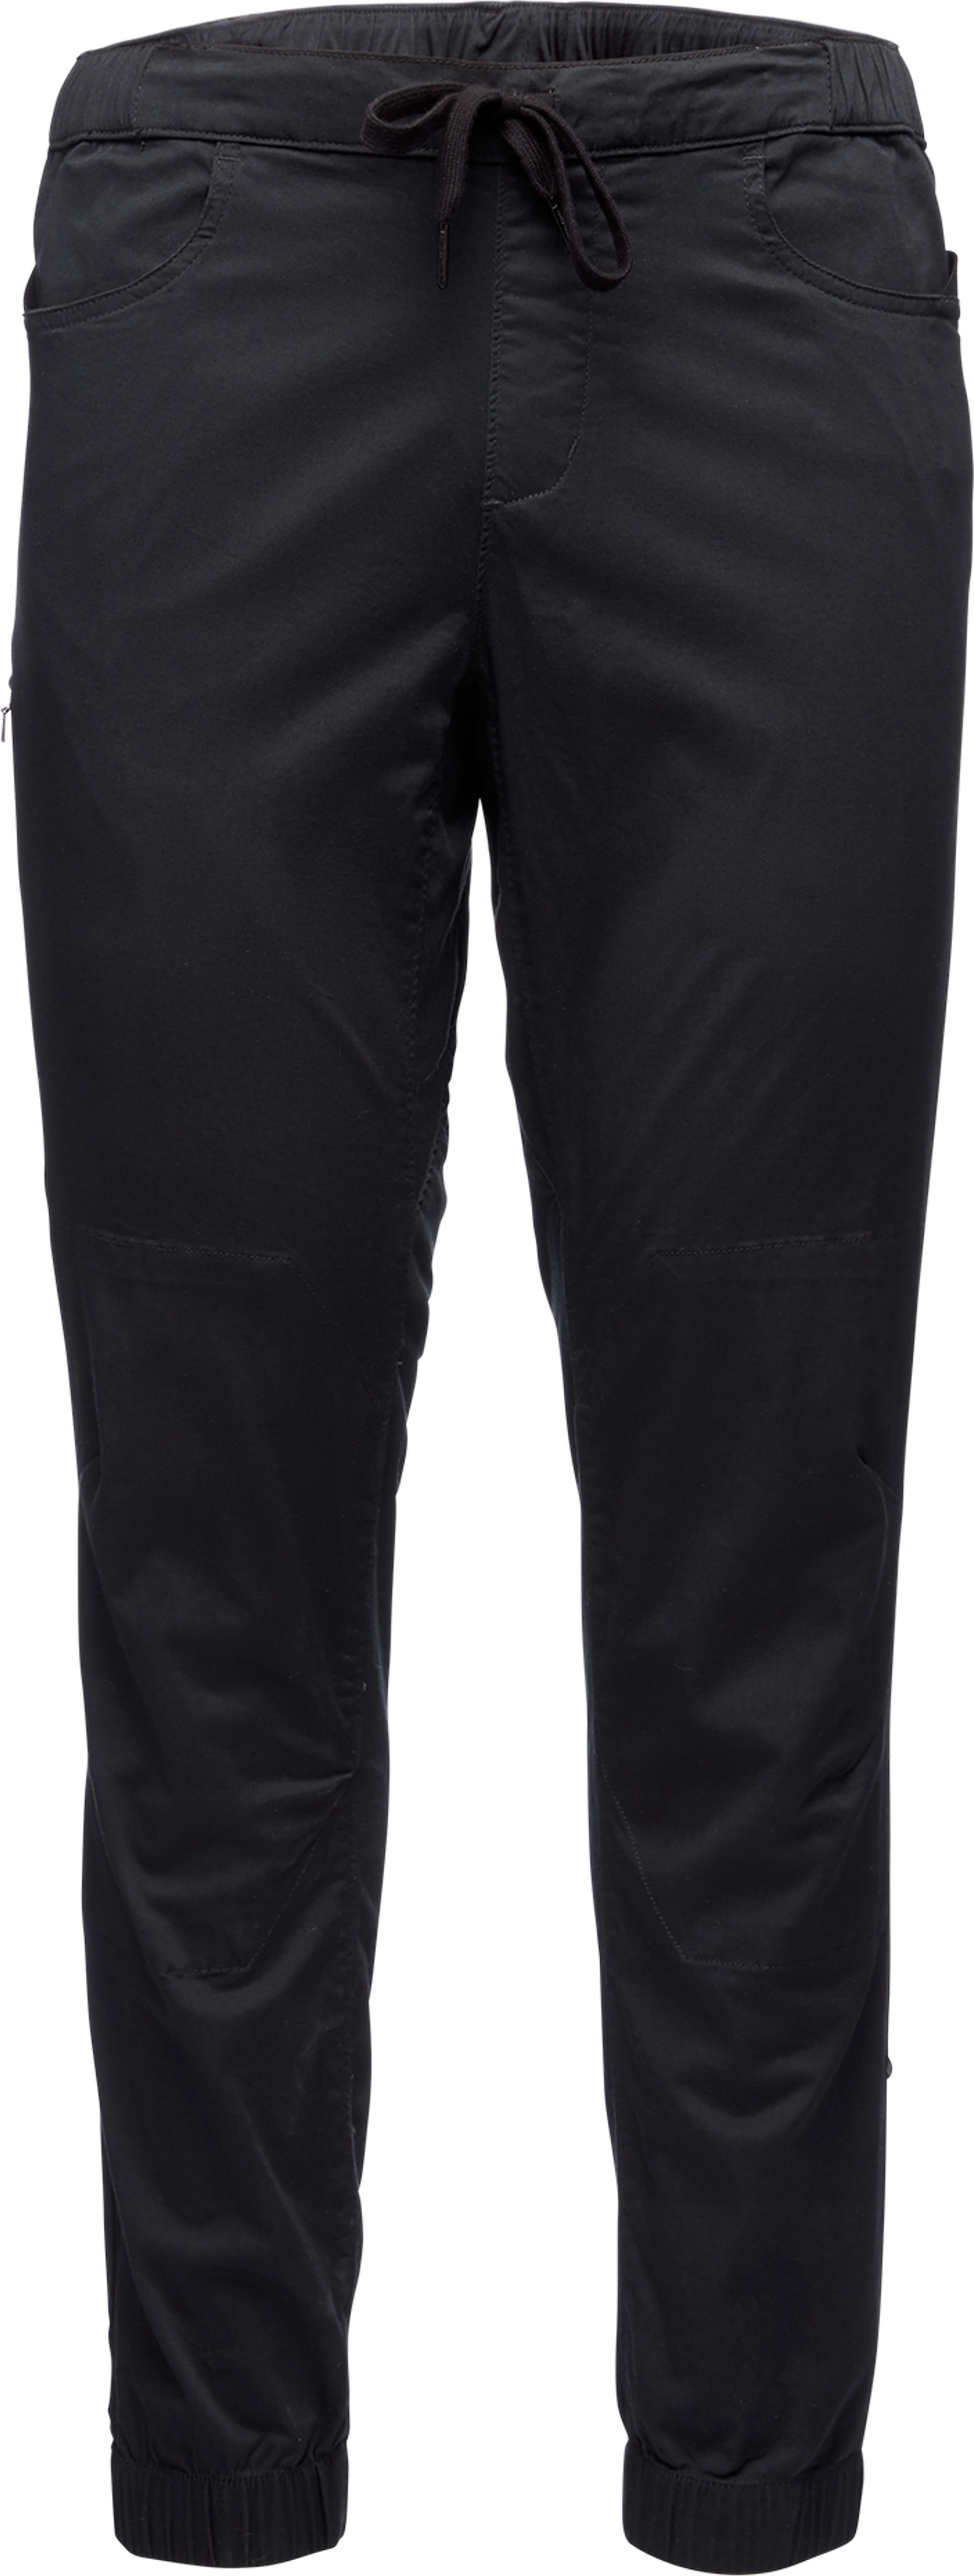 Versterker Rijden woensdag Buy Black Diamond Men's Notion Pants from Outnorth